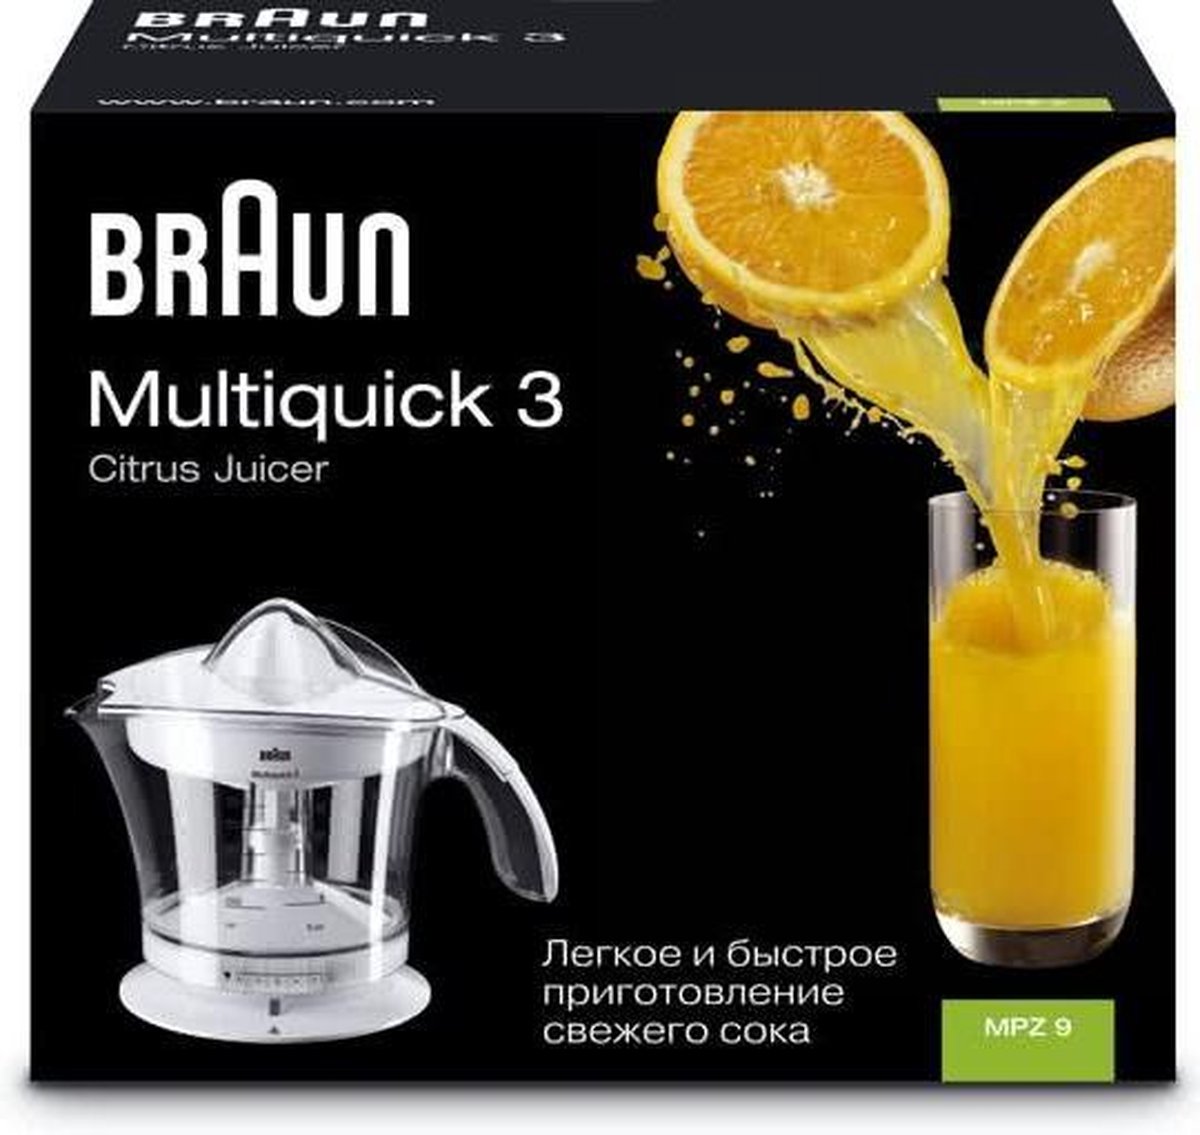 Braun MultiQuick 3 MPZ 9